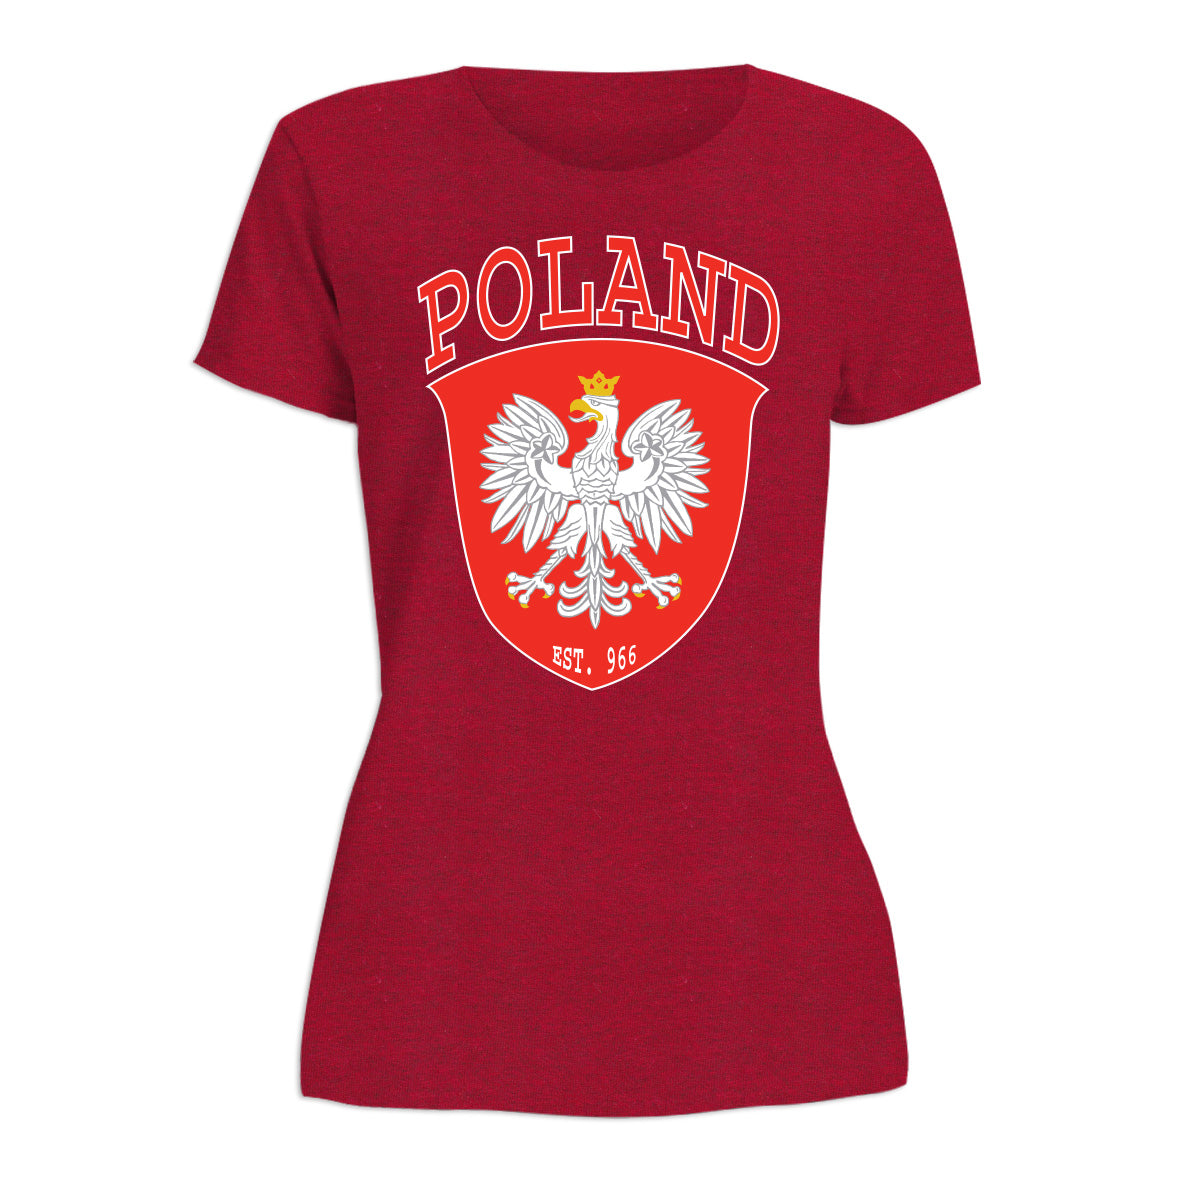 Poland Shield Est. 966 Women's Short Sleeve Tshirt